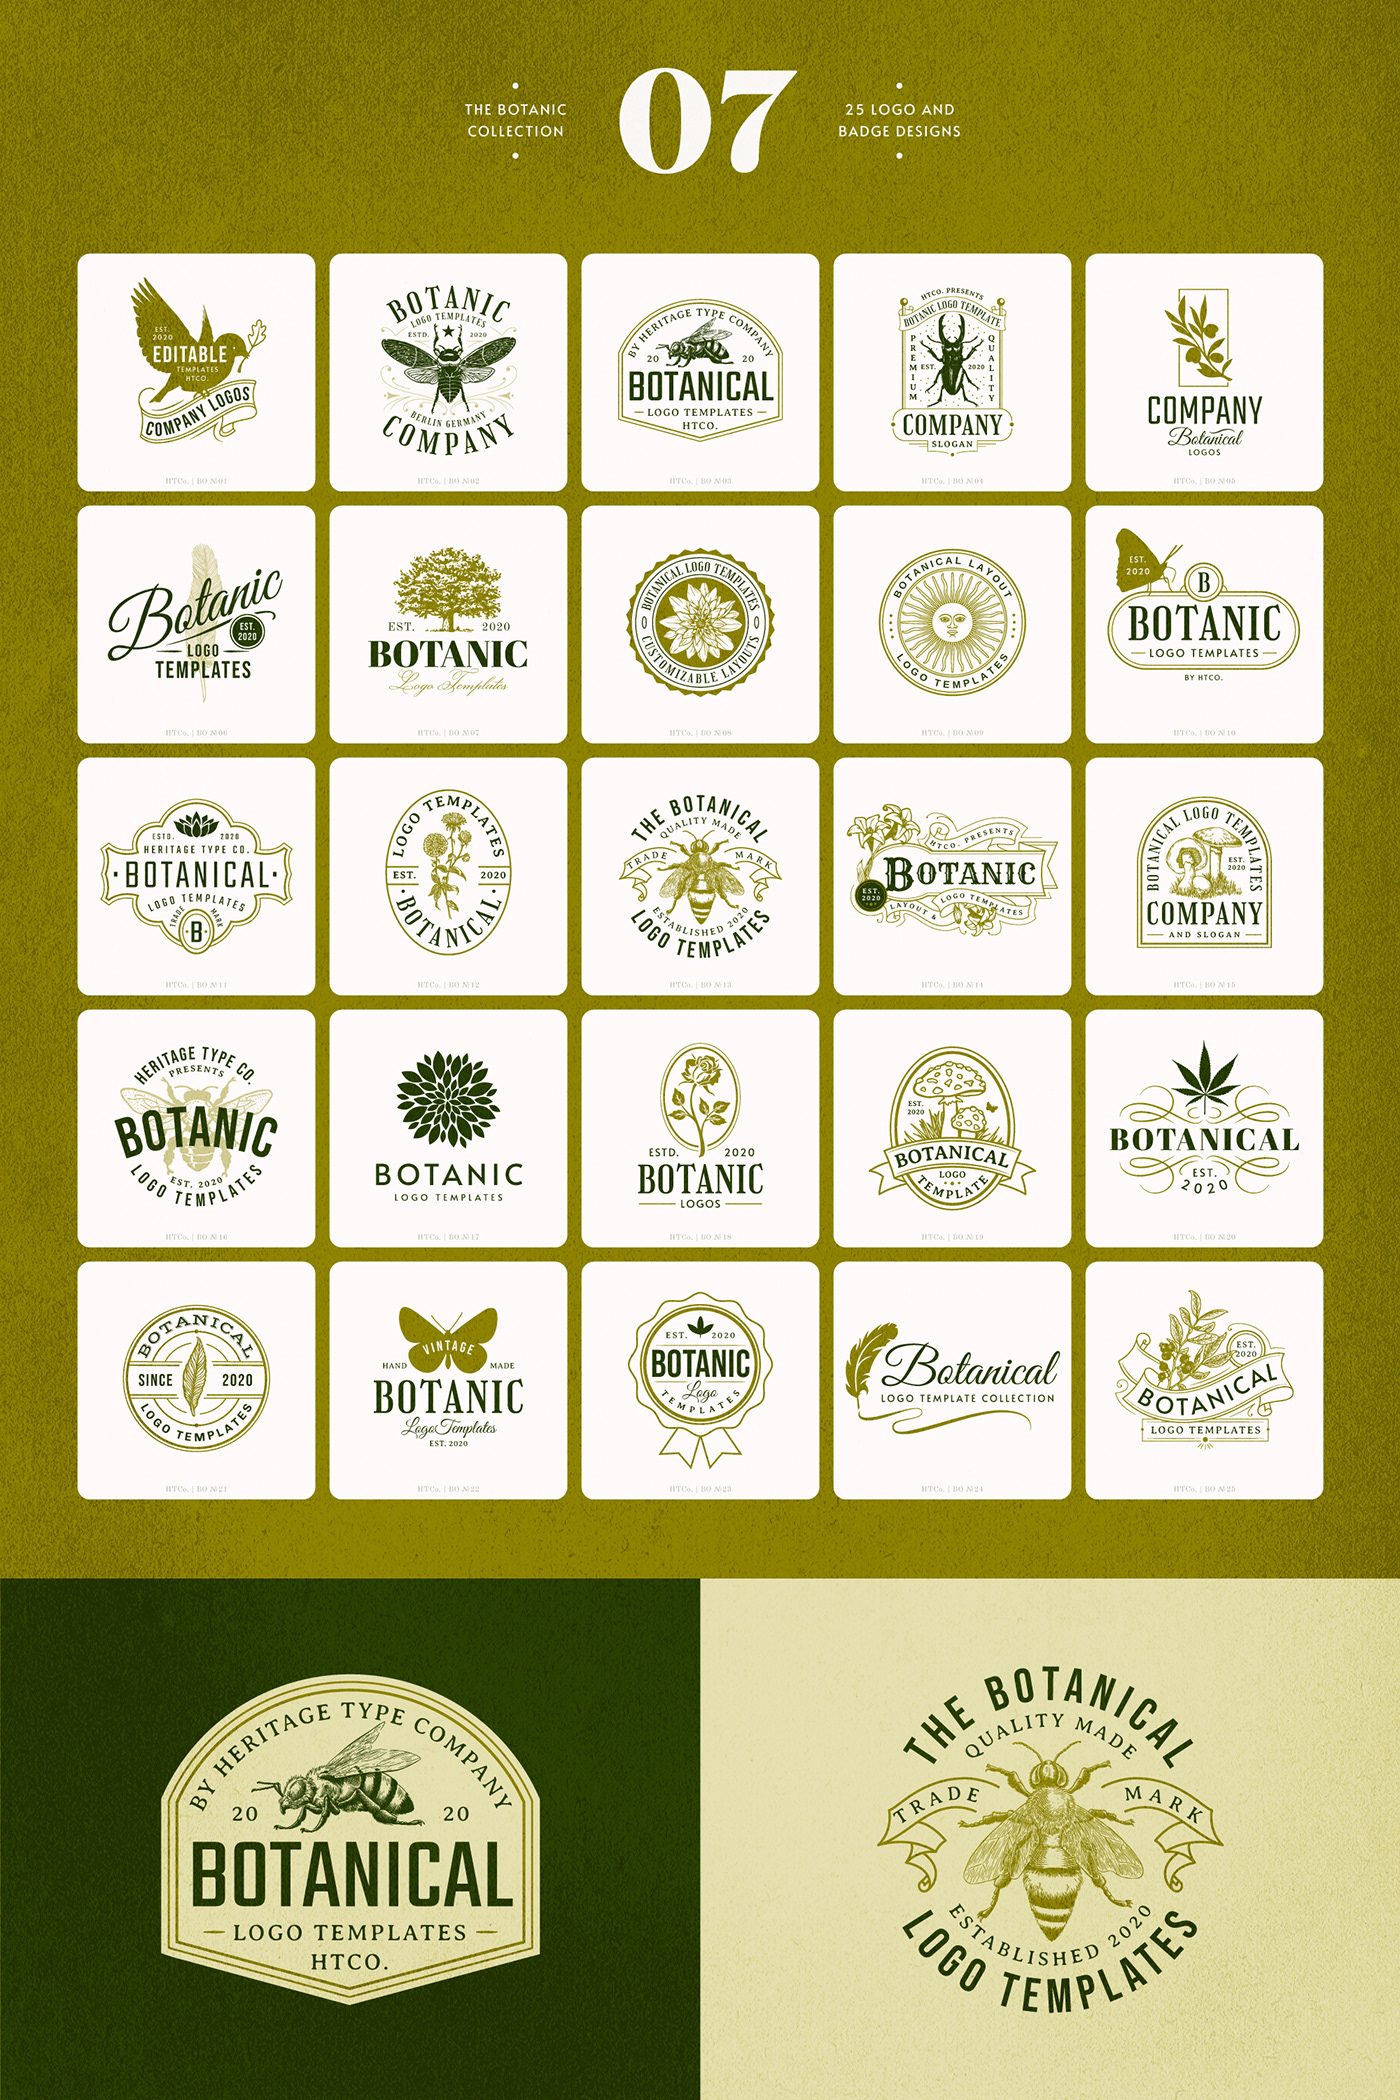 A collection of botanic logo templates